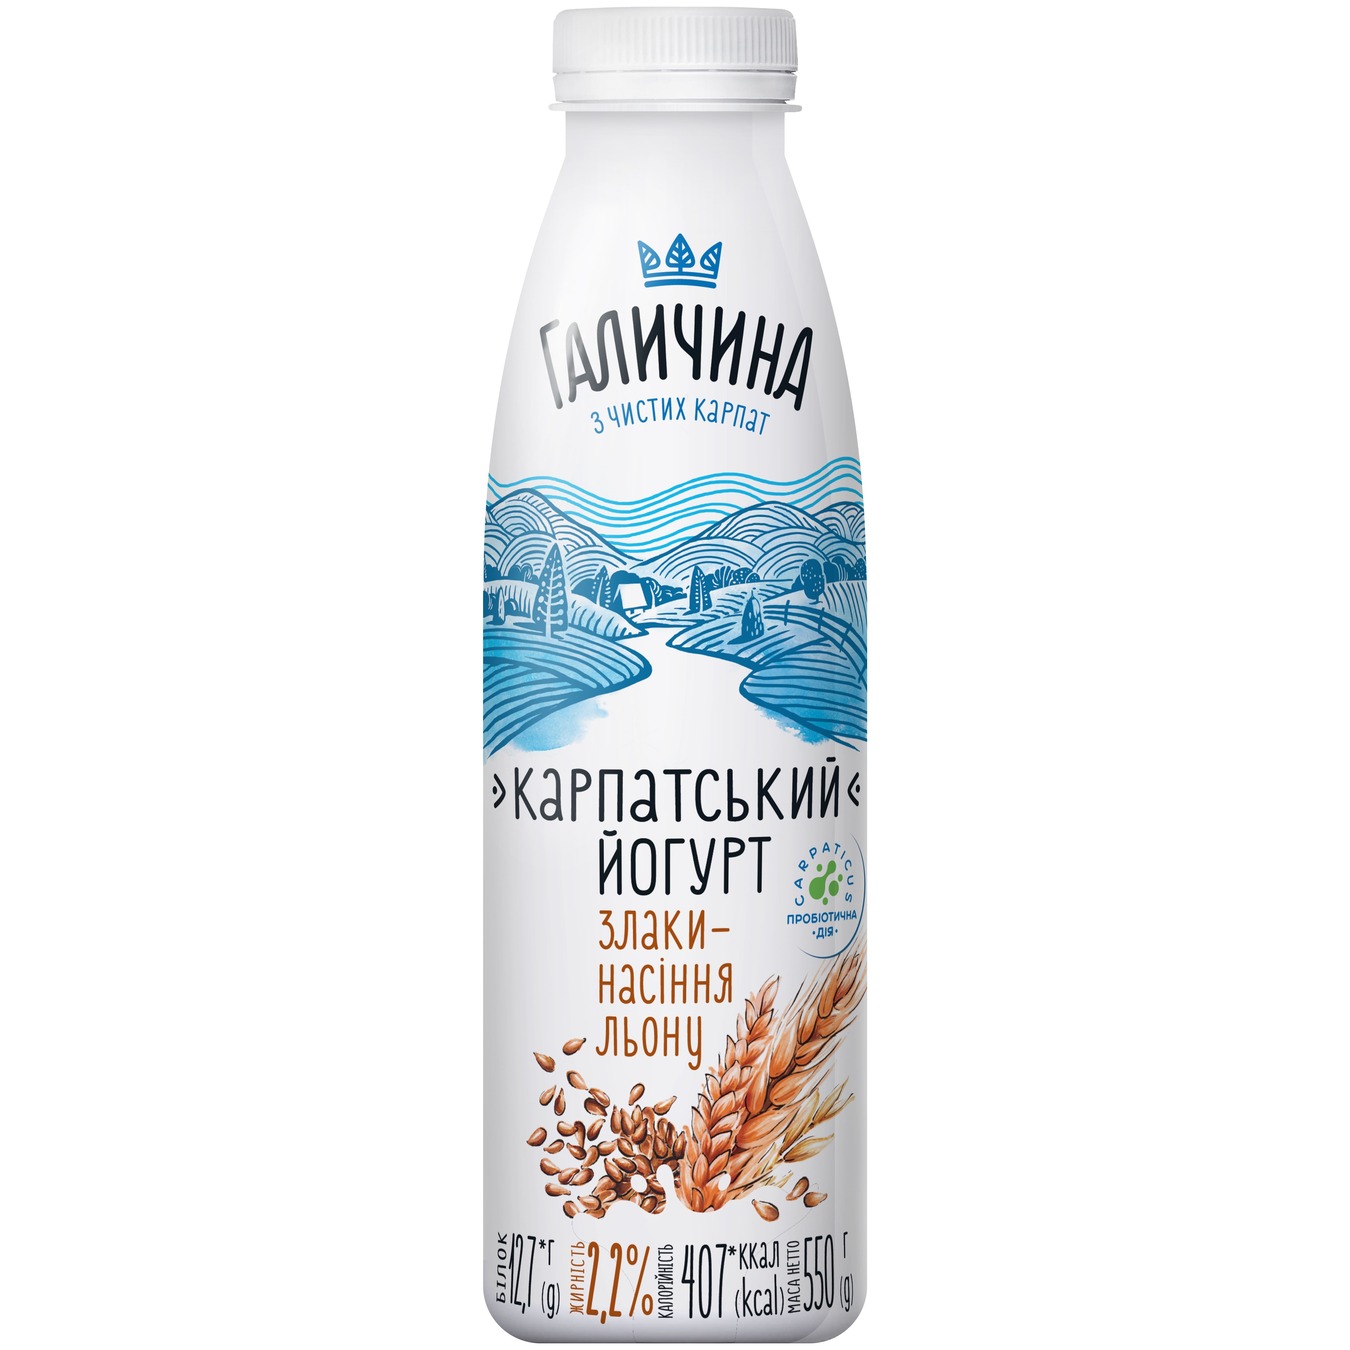 Galychyna Yogurt Cereals-flax seeds 2.2% 550g